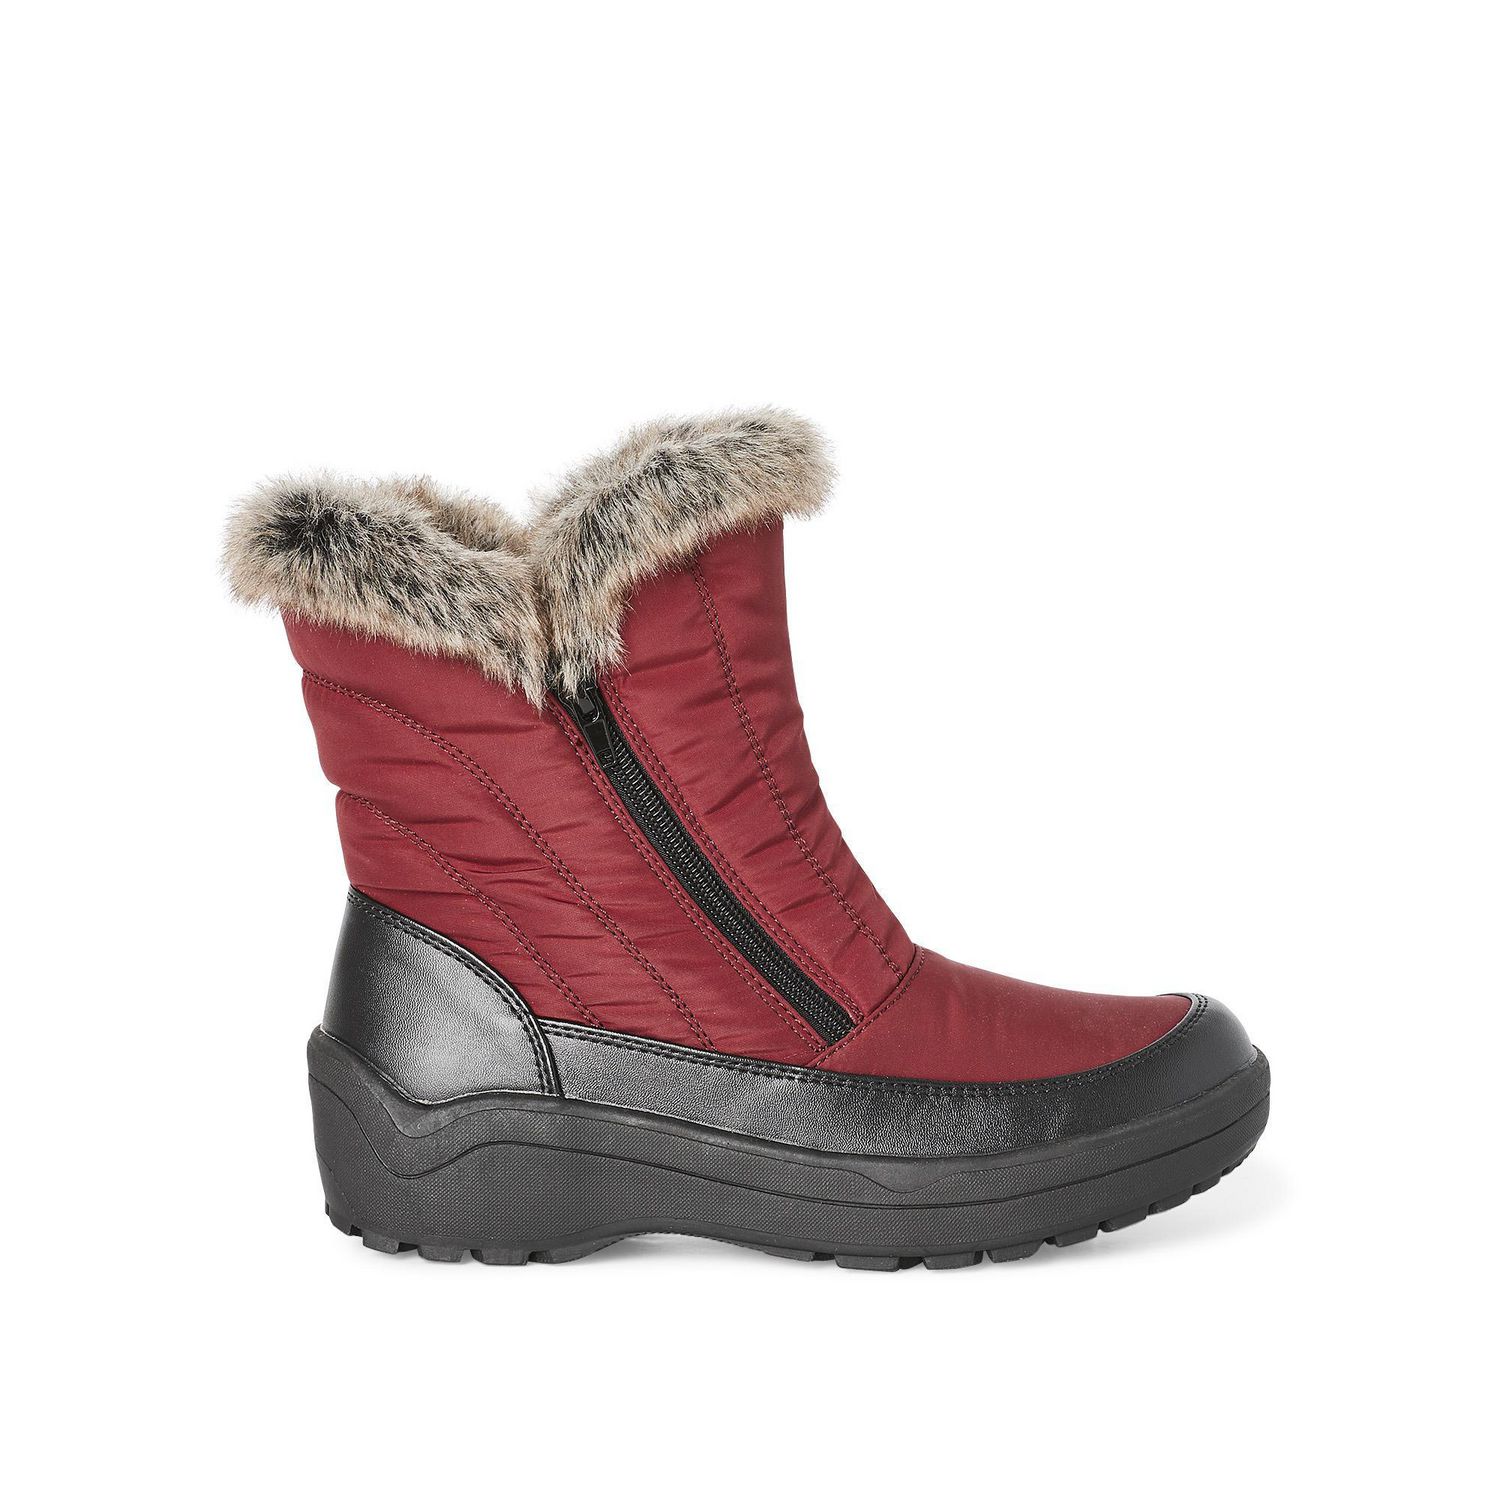 Weather Spirits Women's Stormy Boots | Walmart Canada